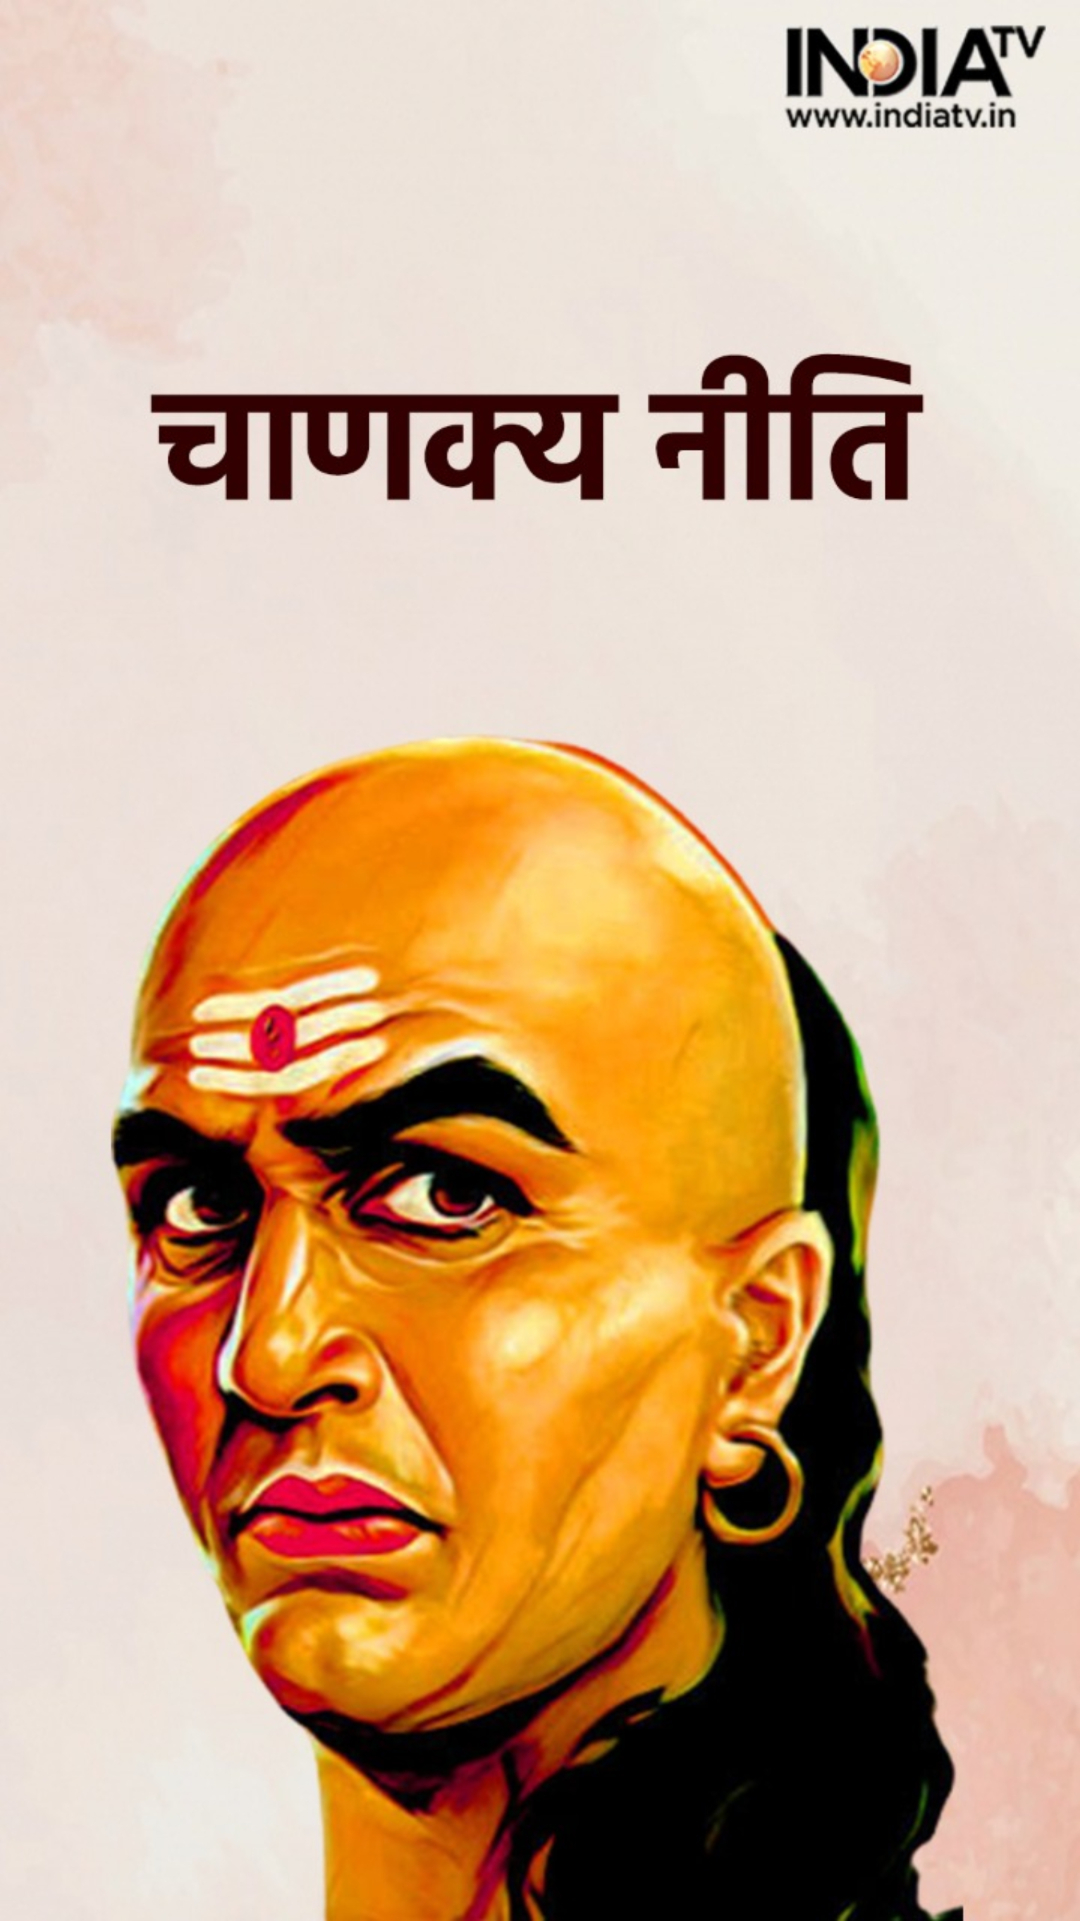 34 Chanakya Vector Images | Depositphotos